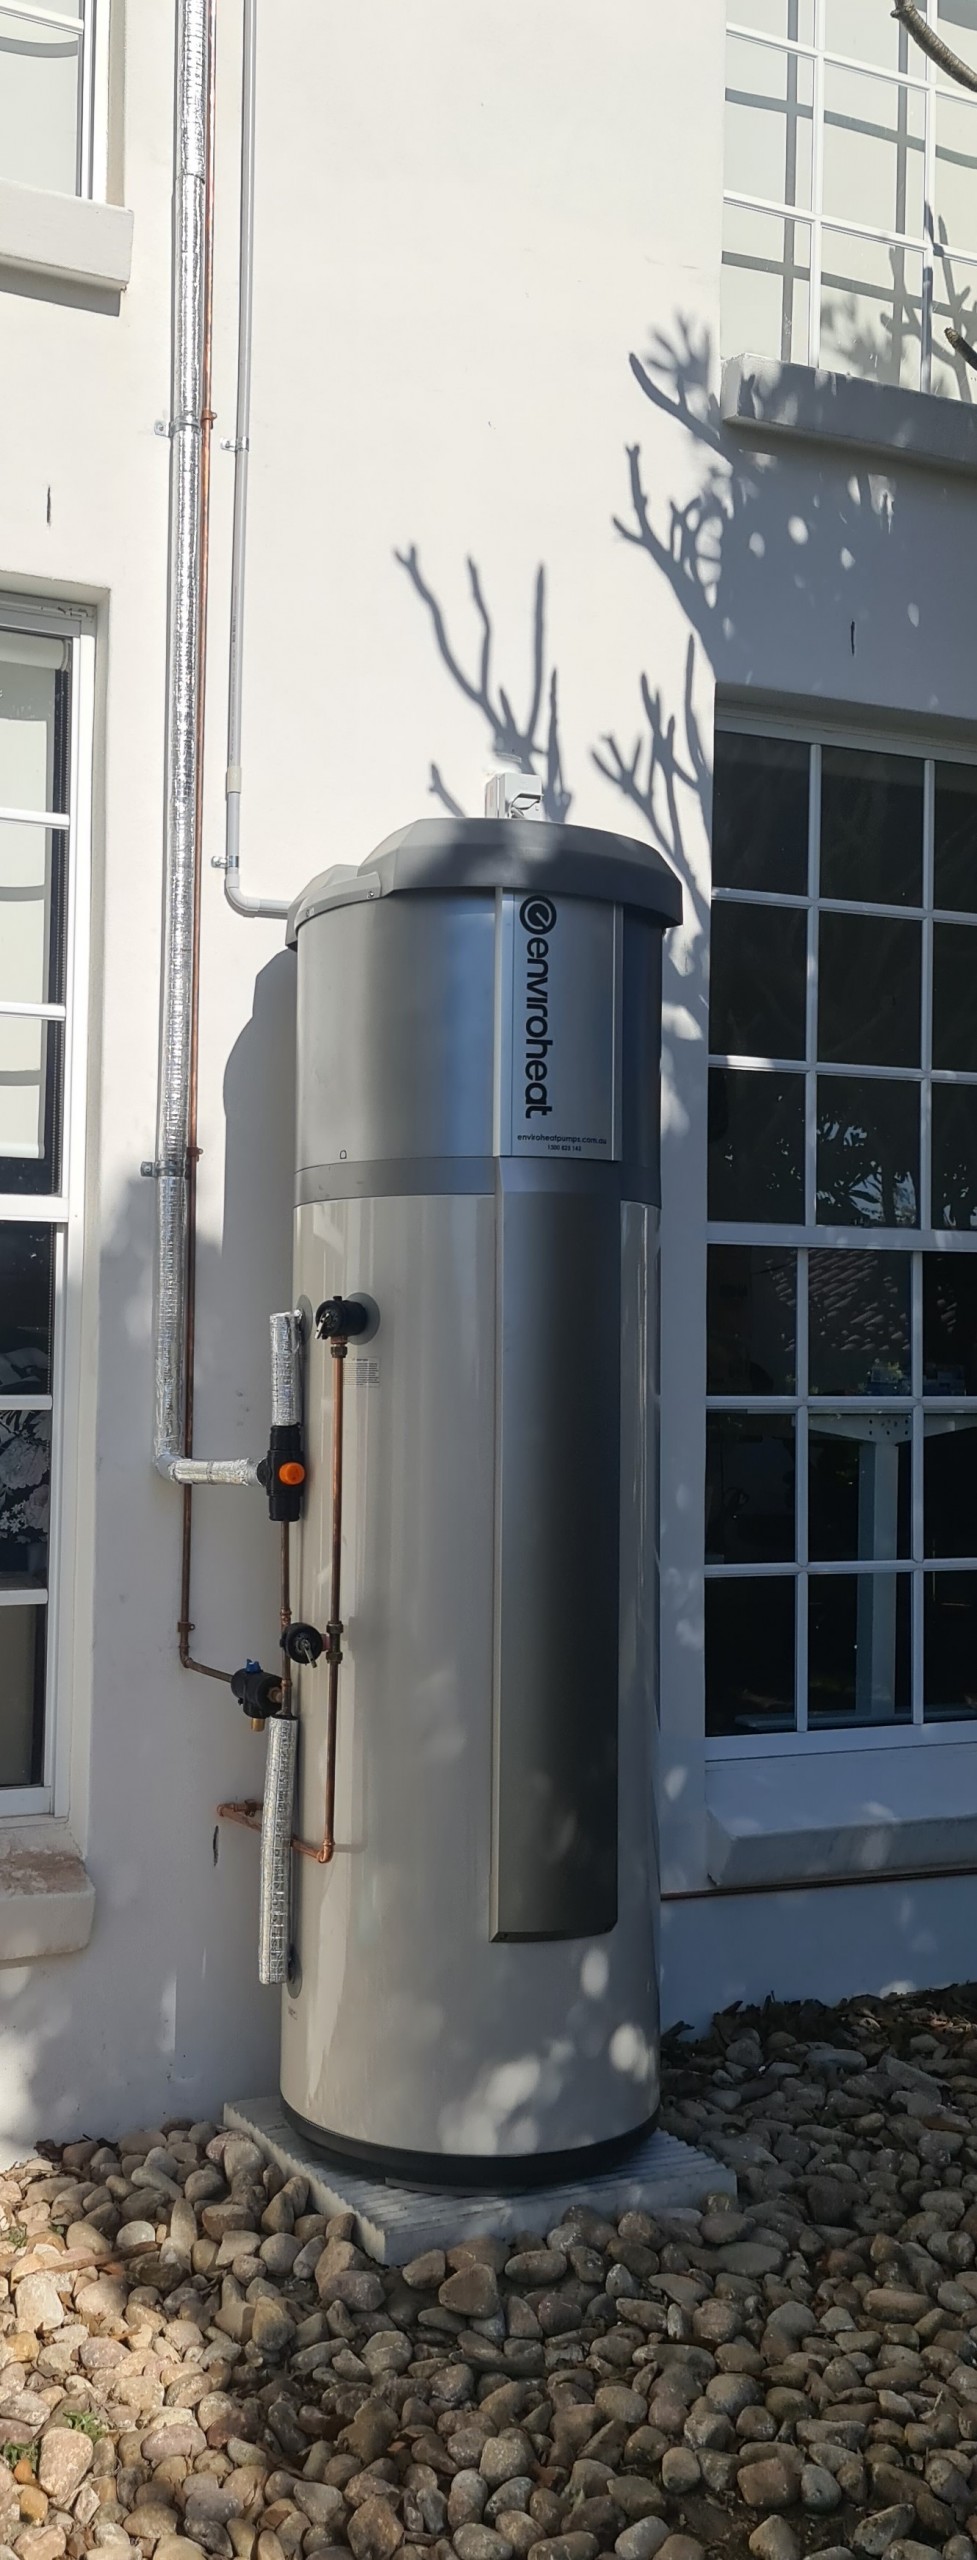 Enviroheat Heat Pump Hot Water System